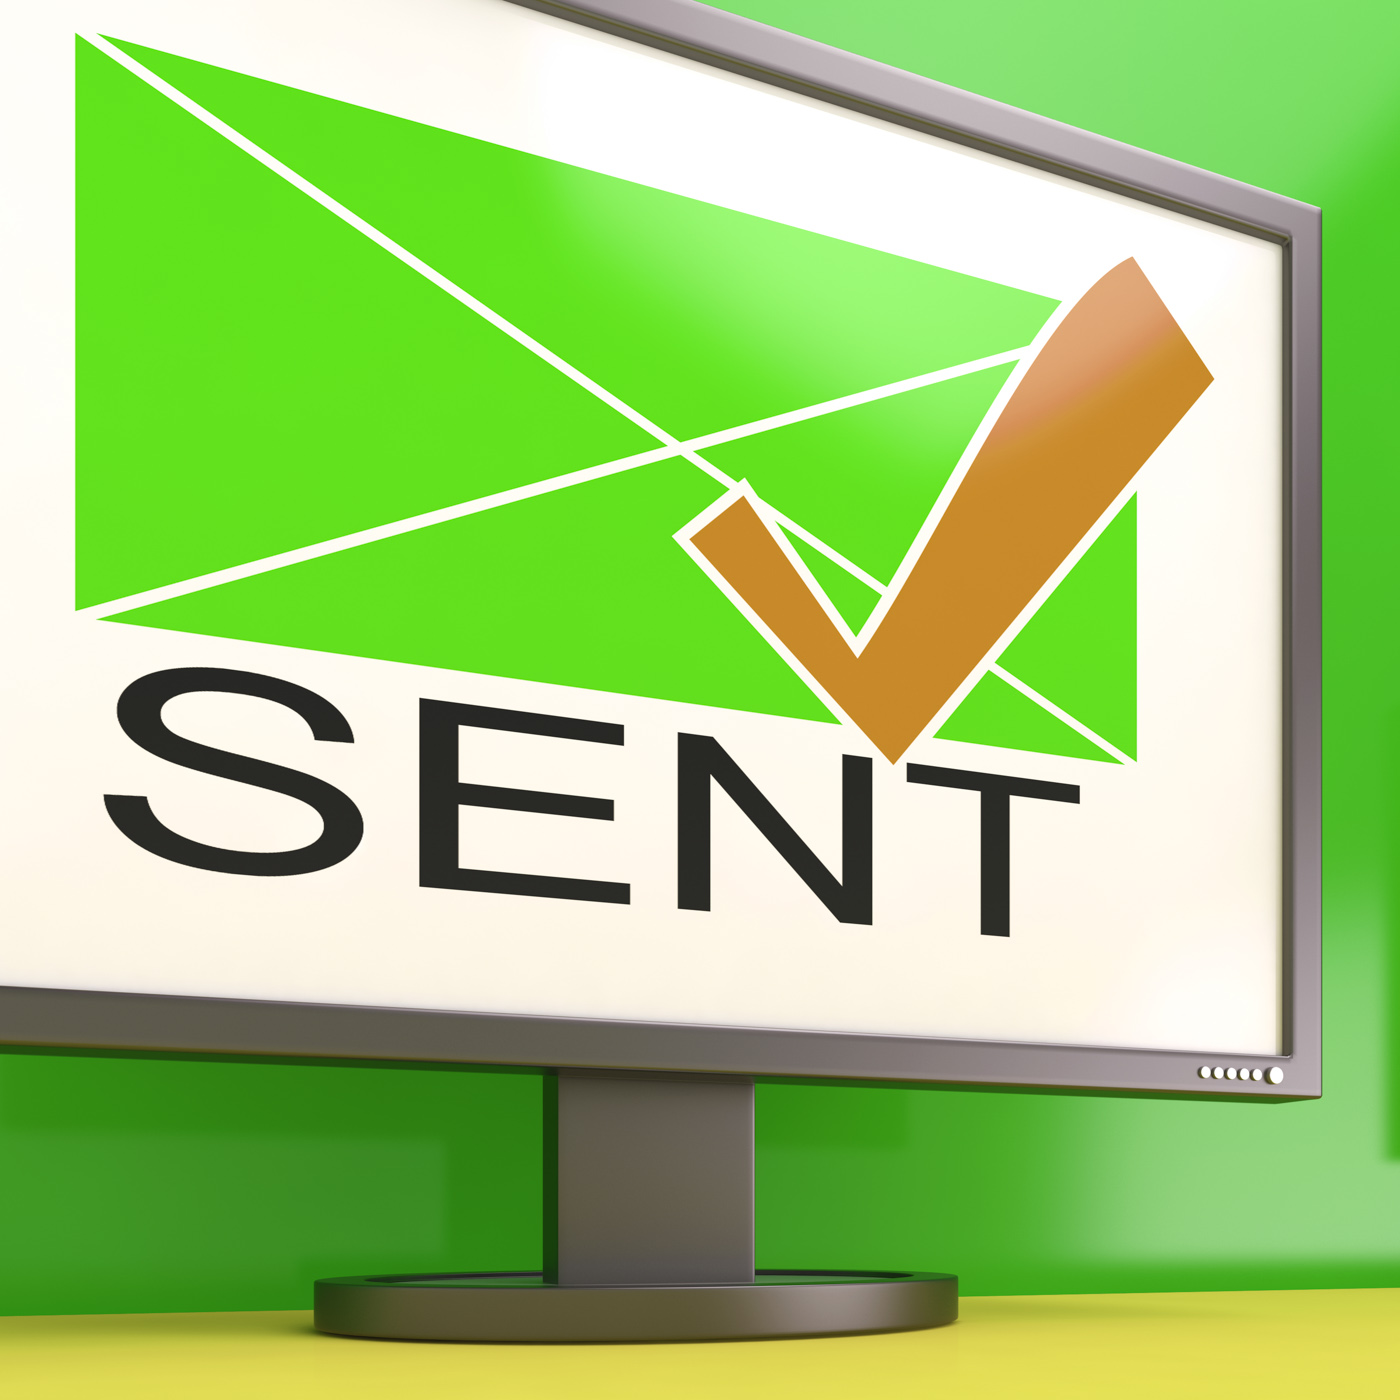 Sent envelope on monitor showing delivered messages photo